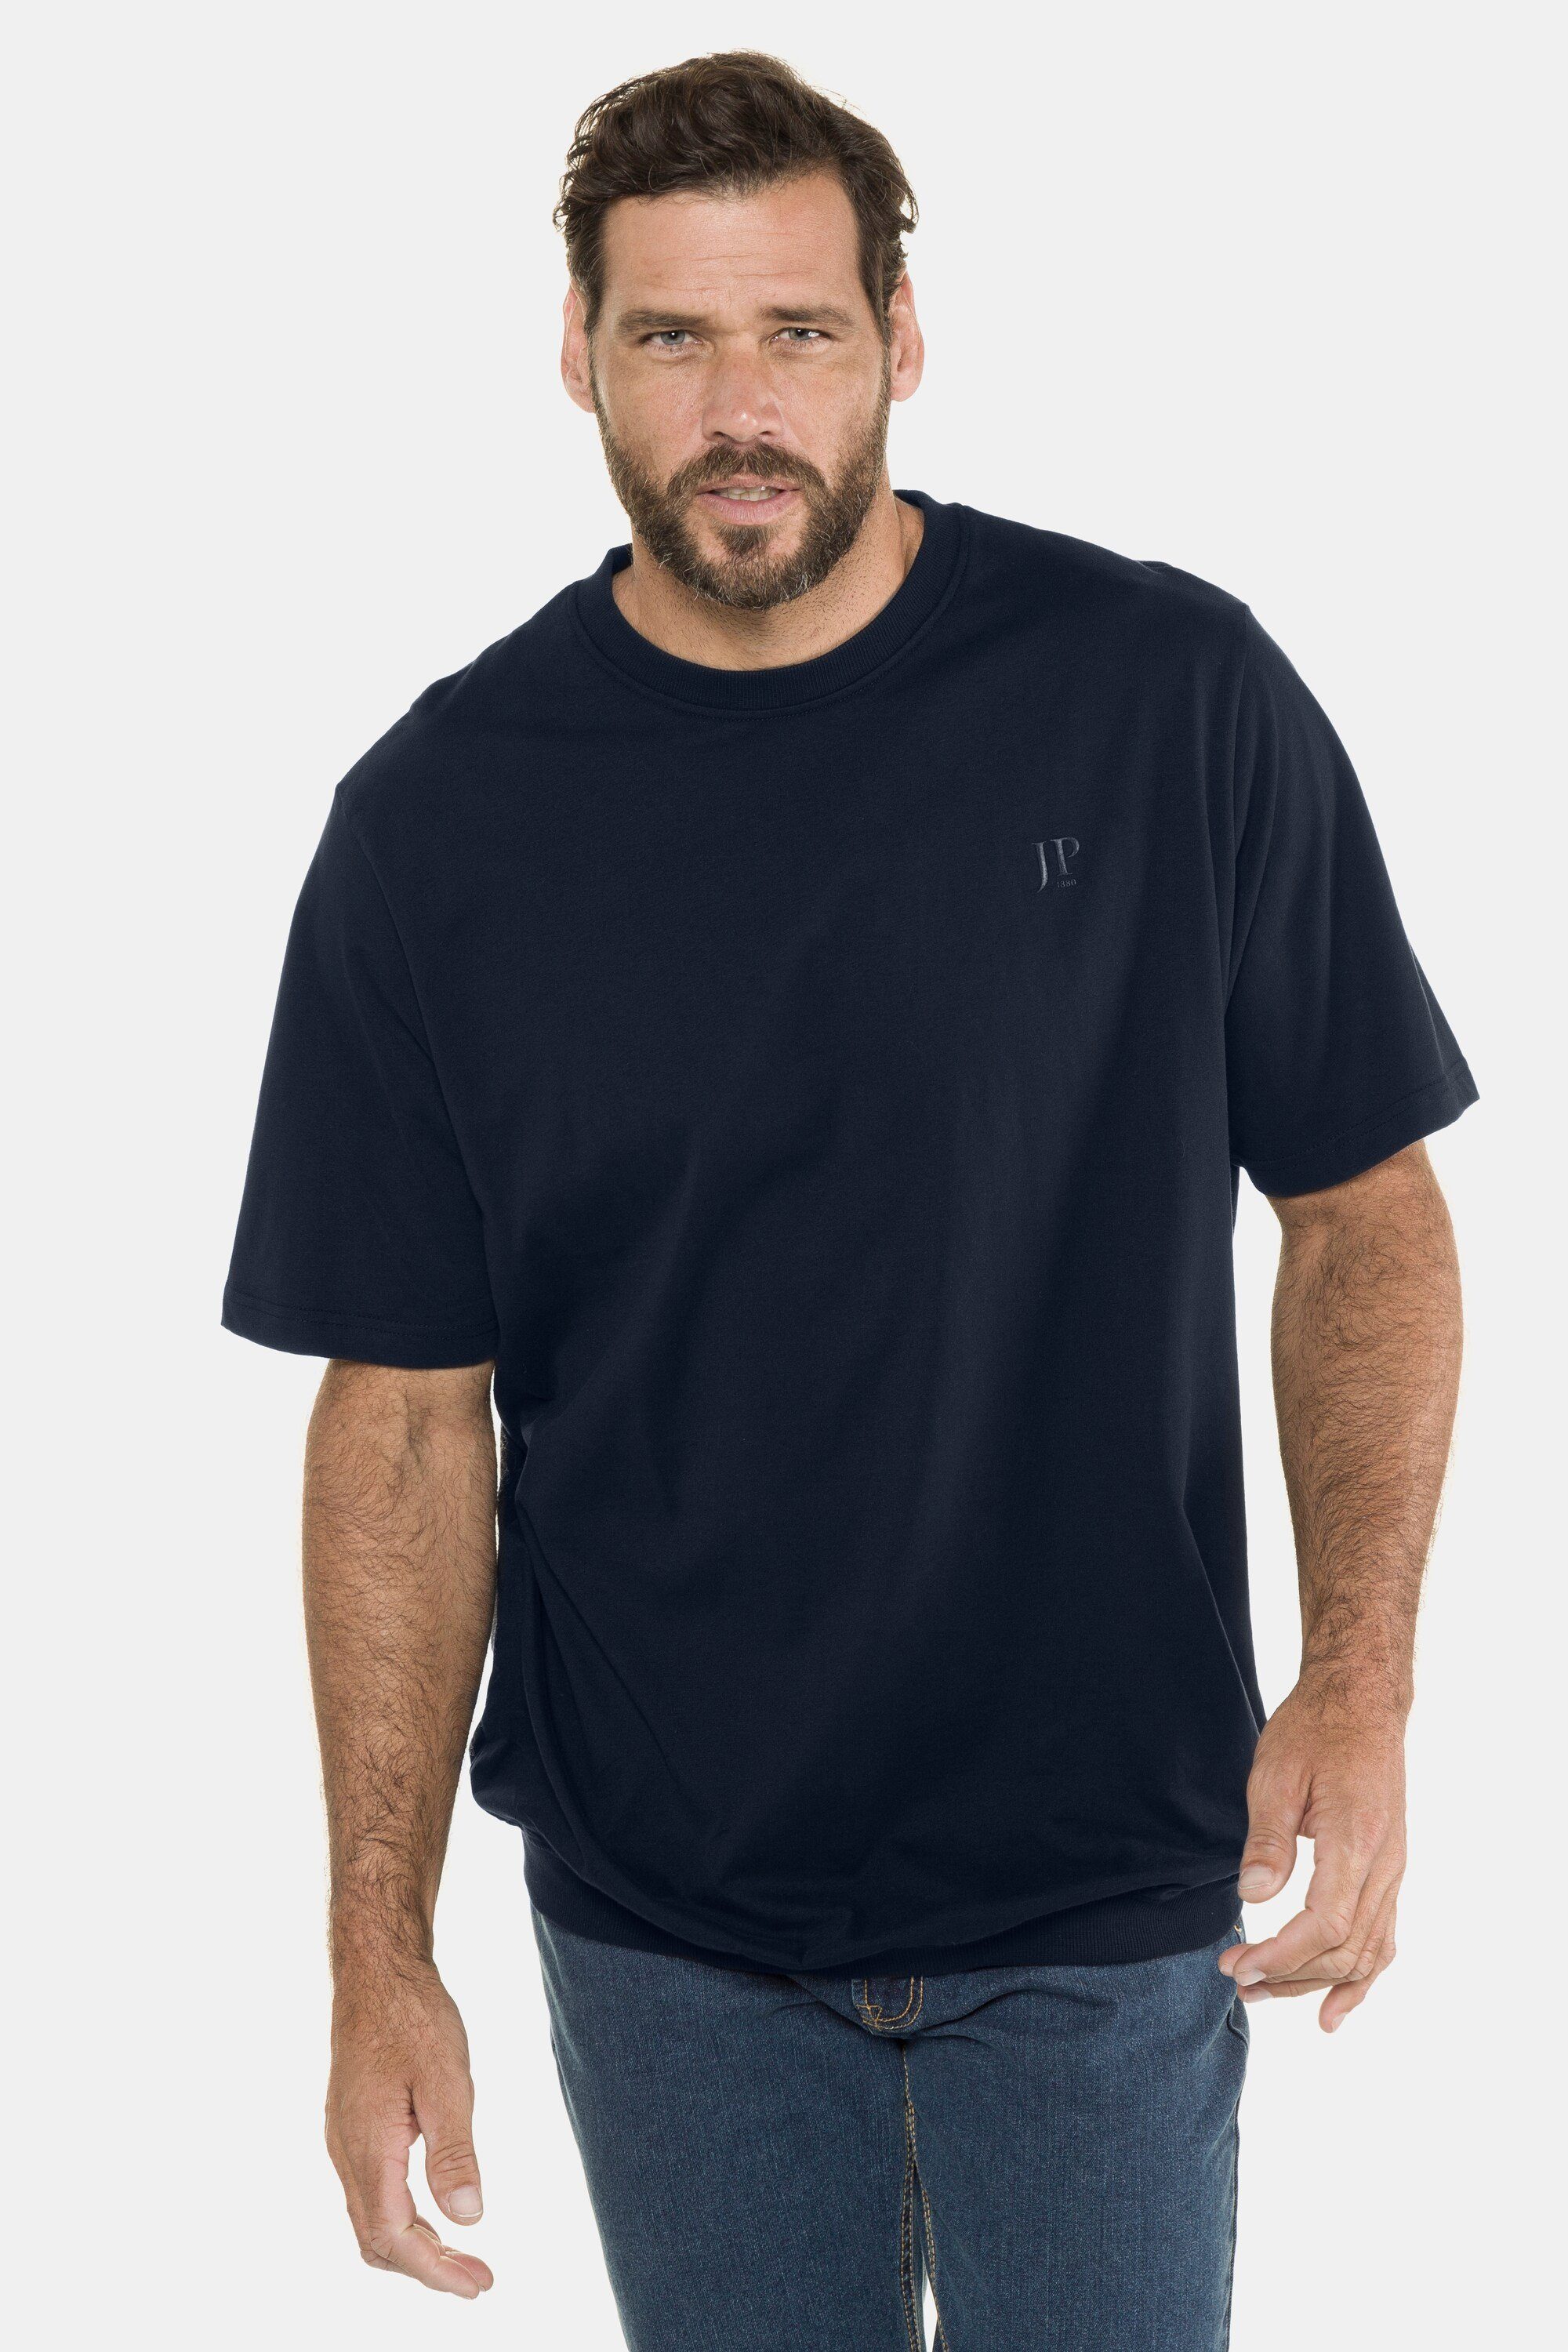 Bauchfit Basic JP1880 Halbarm T-Shirt 10XL T-Shirt dunkel bis marine XXL